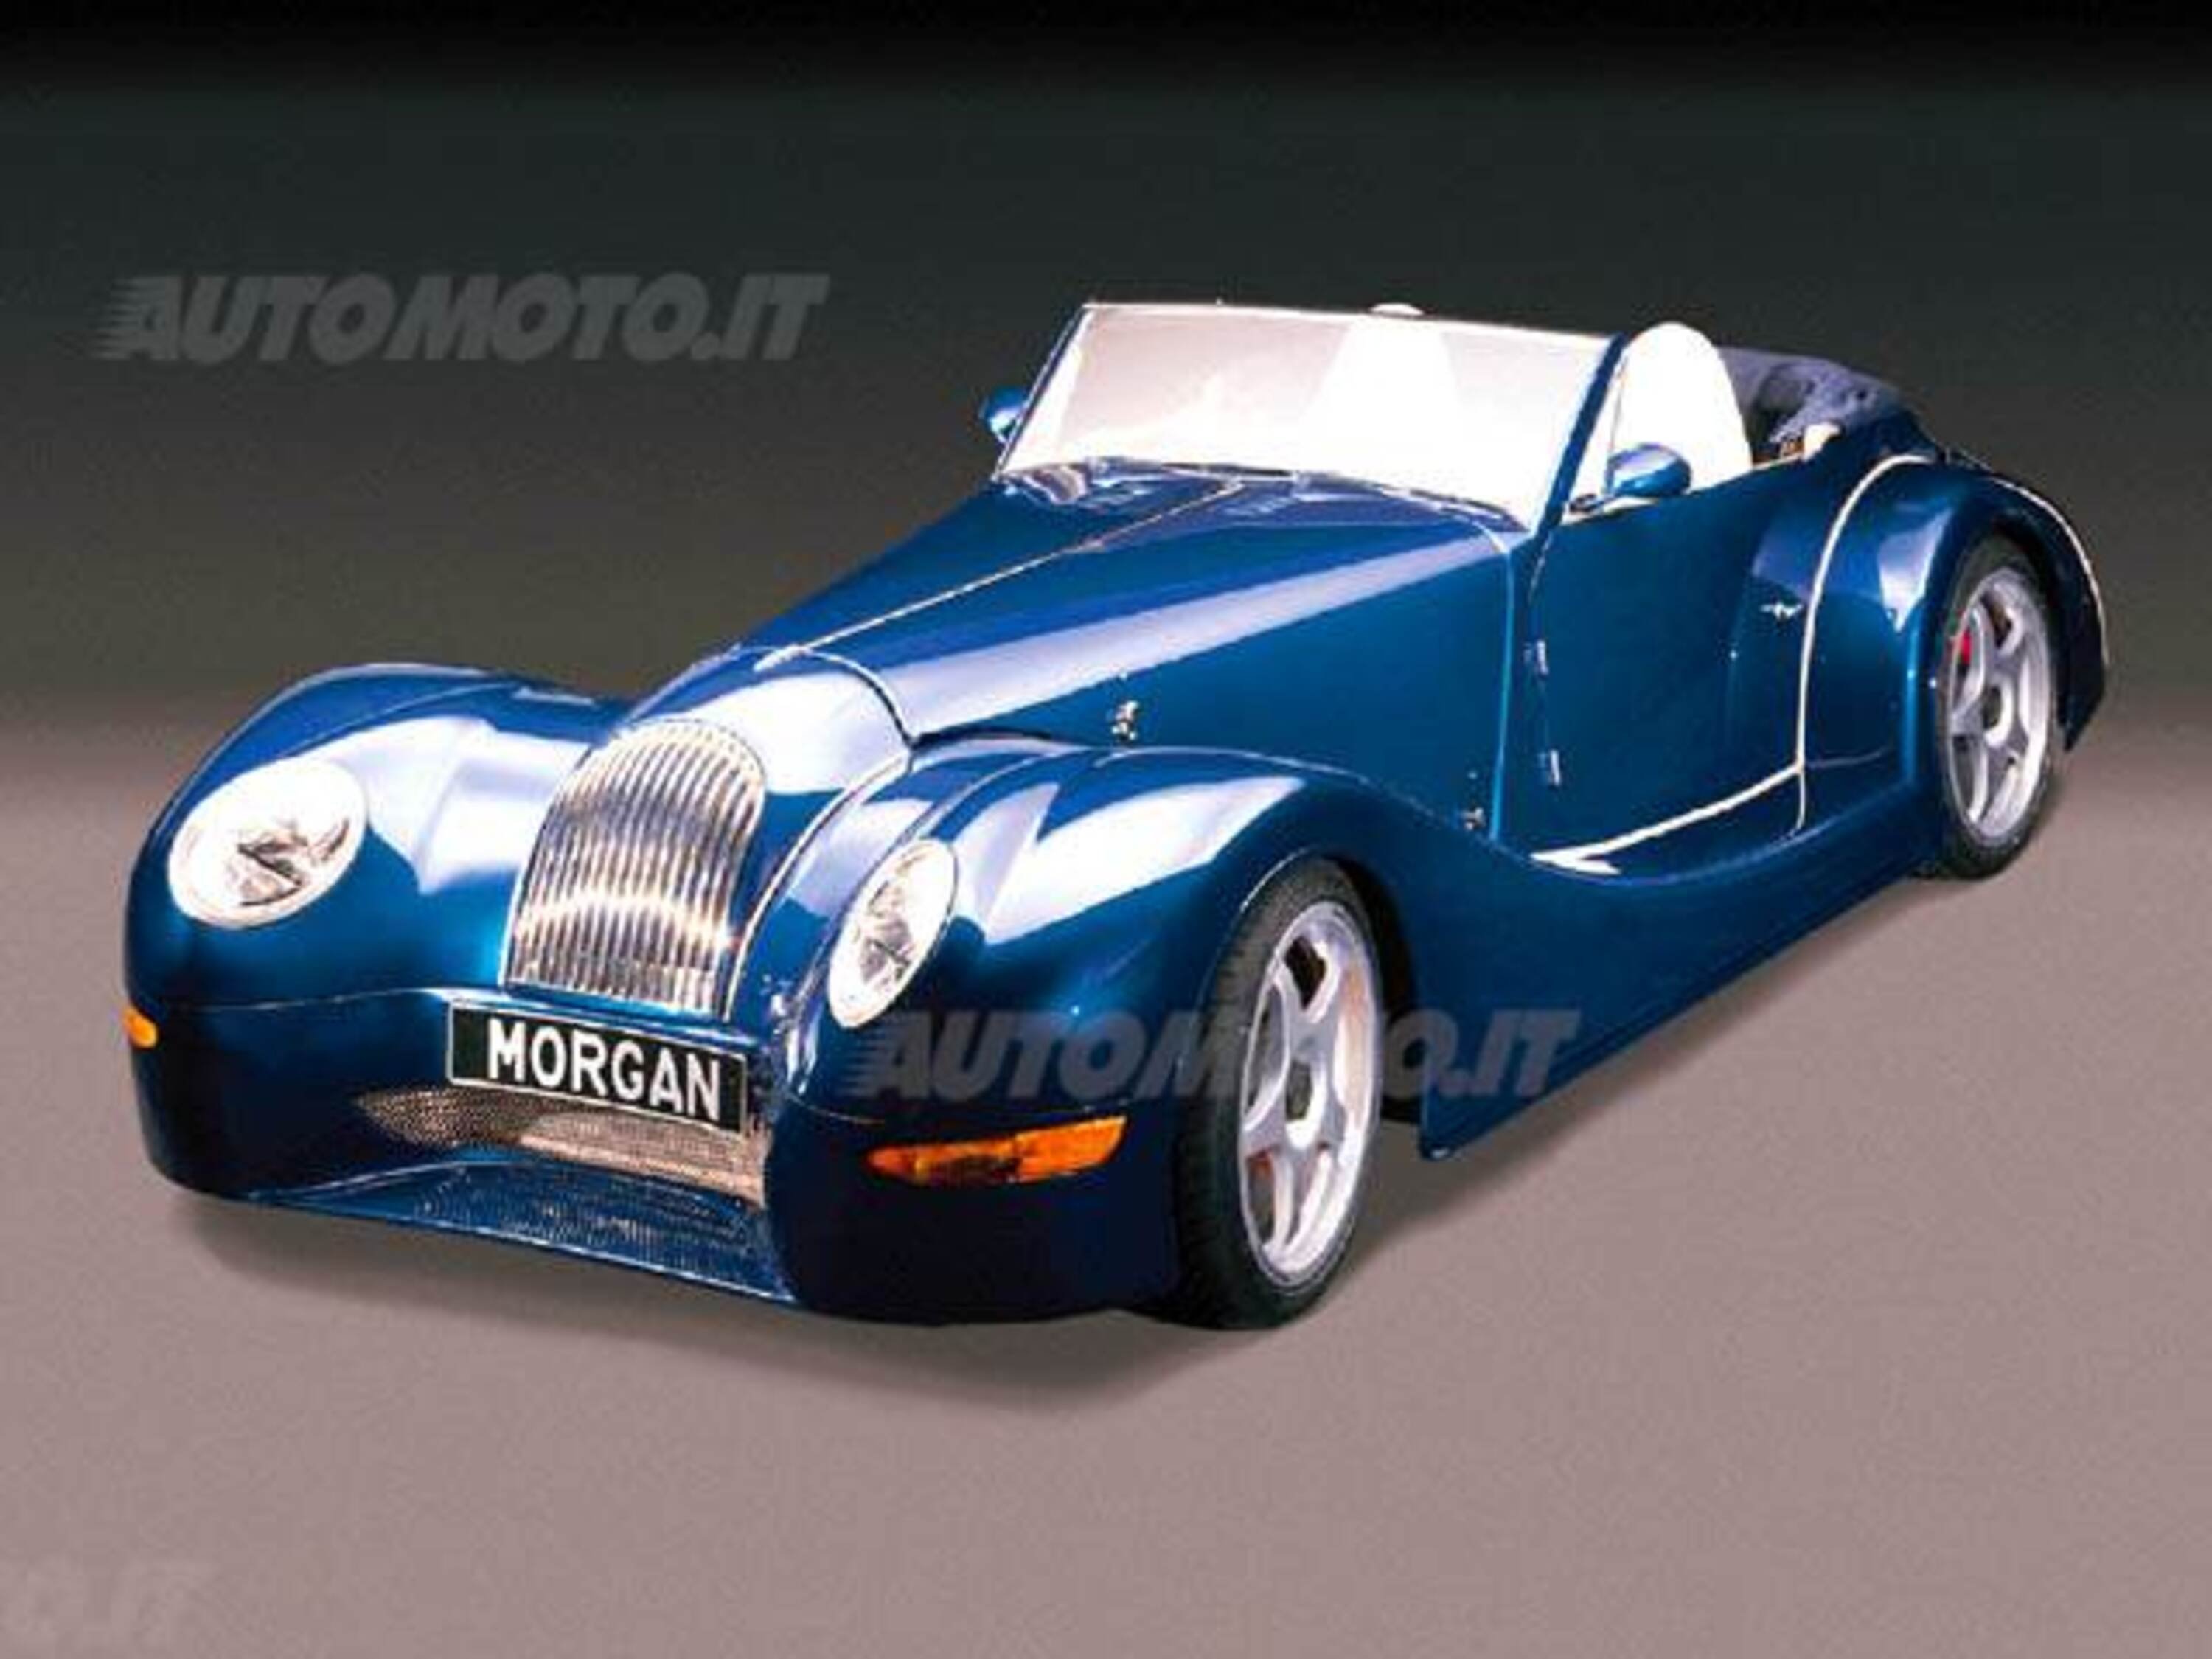 Morgan Morgan Aero 8 4.4i V8 32V cat my 06